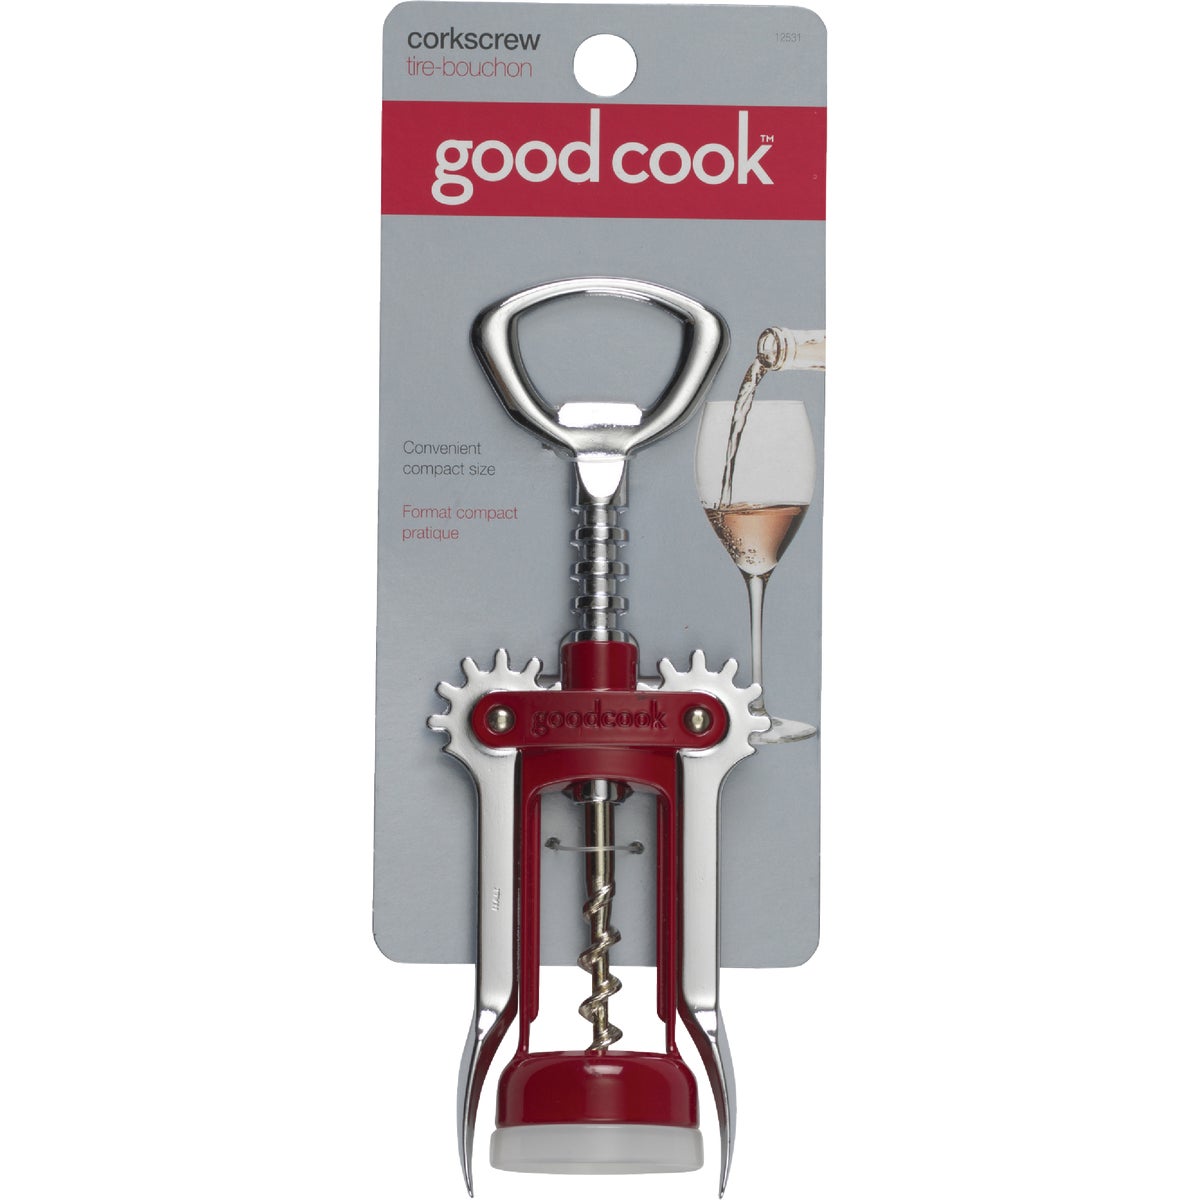 Goodcook Winged Corkscrew Bottle Opener